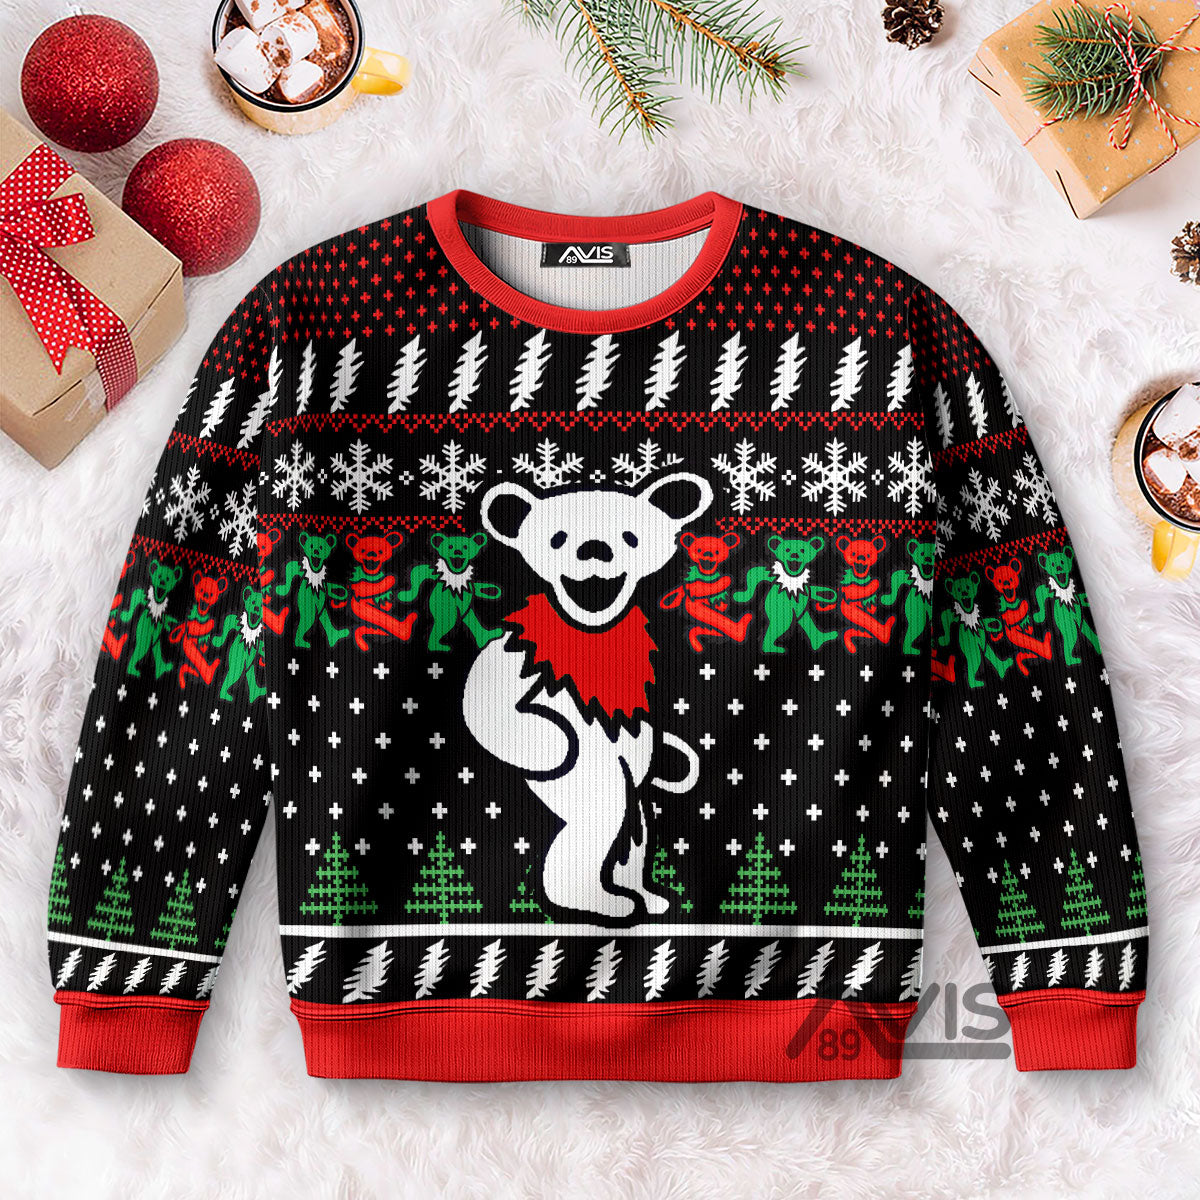 Grateful Dancing Bears Dead Good Ol’ Xmas - Ugly Christmas Sweater